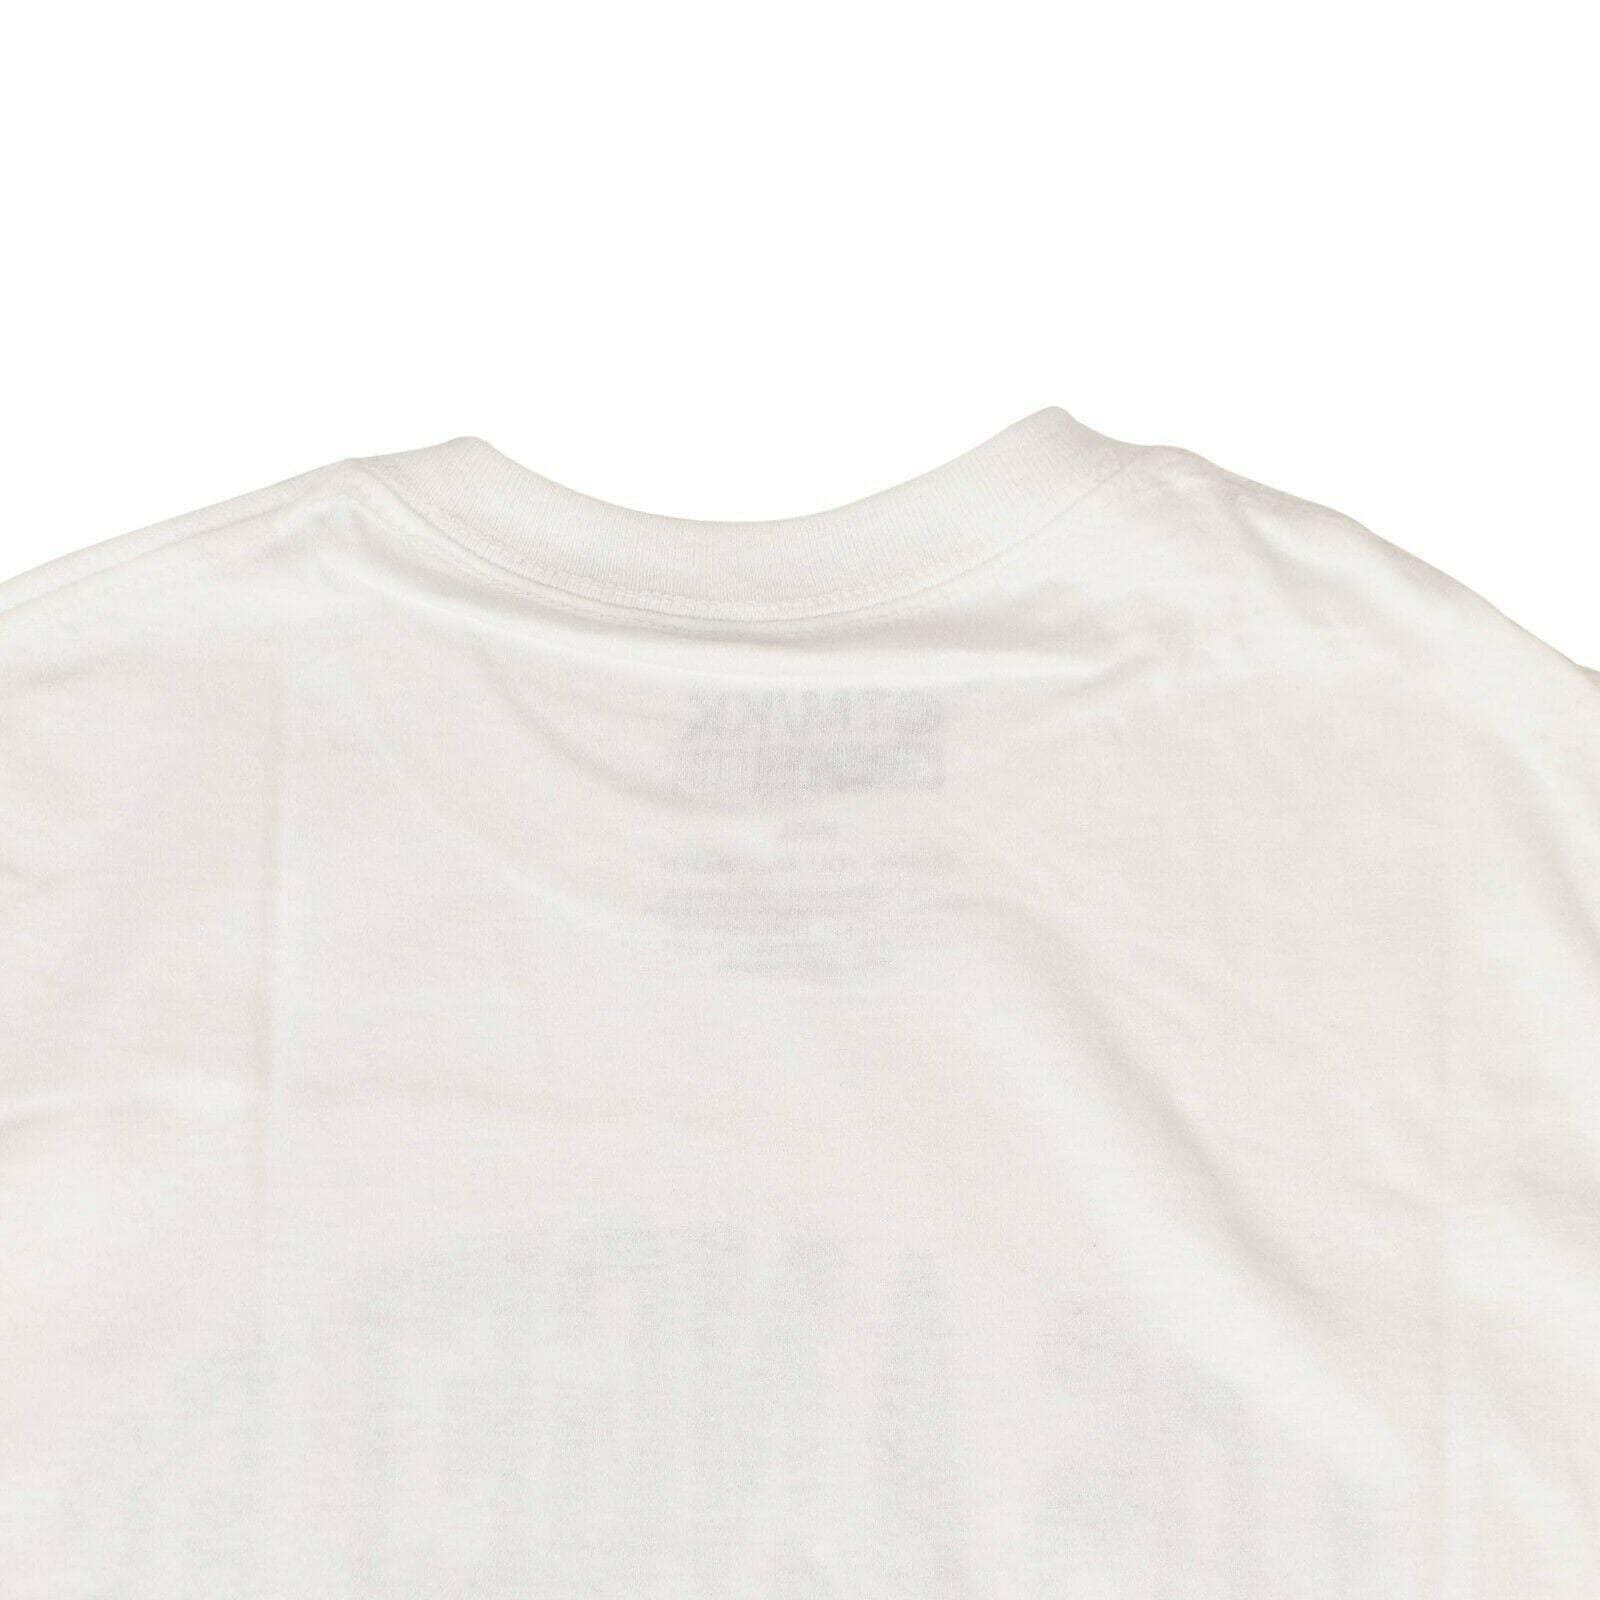 TAKASHI MURAKAMI x COMPLEXCON 'Los Angeles Flower' T-Shirt - White